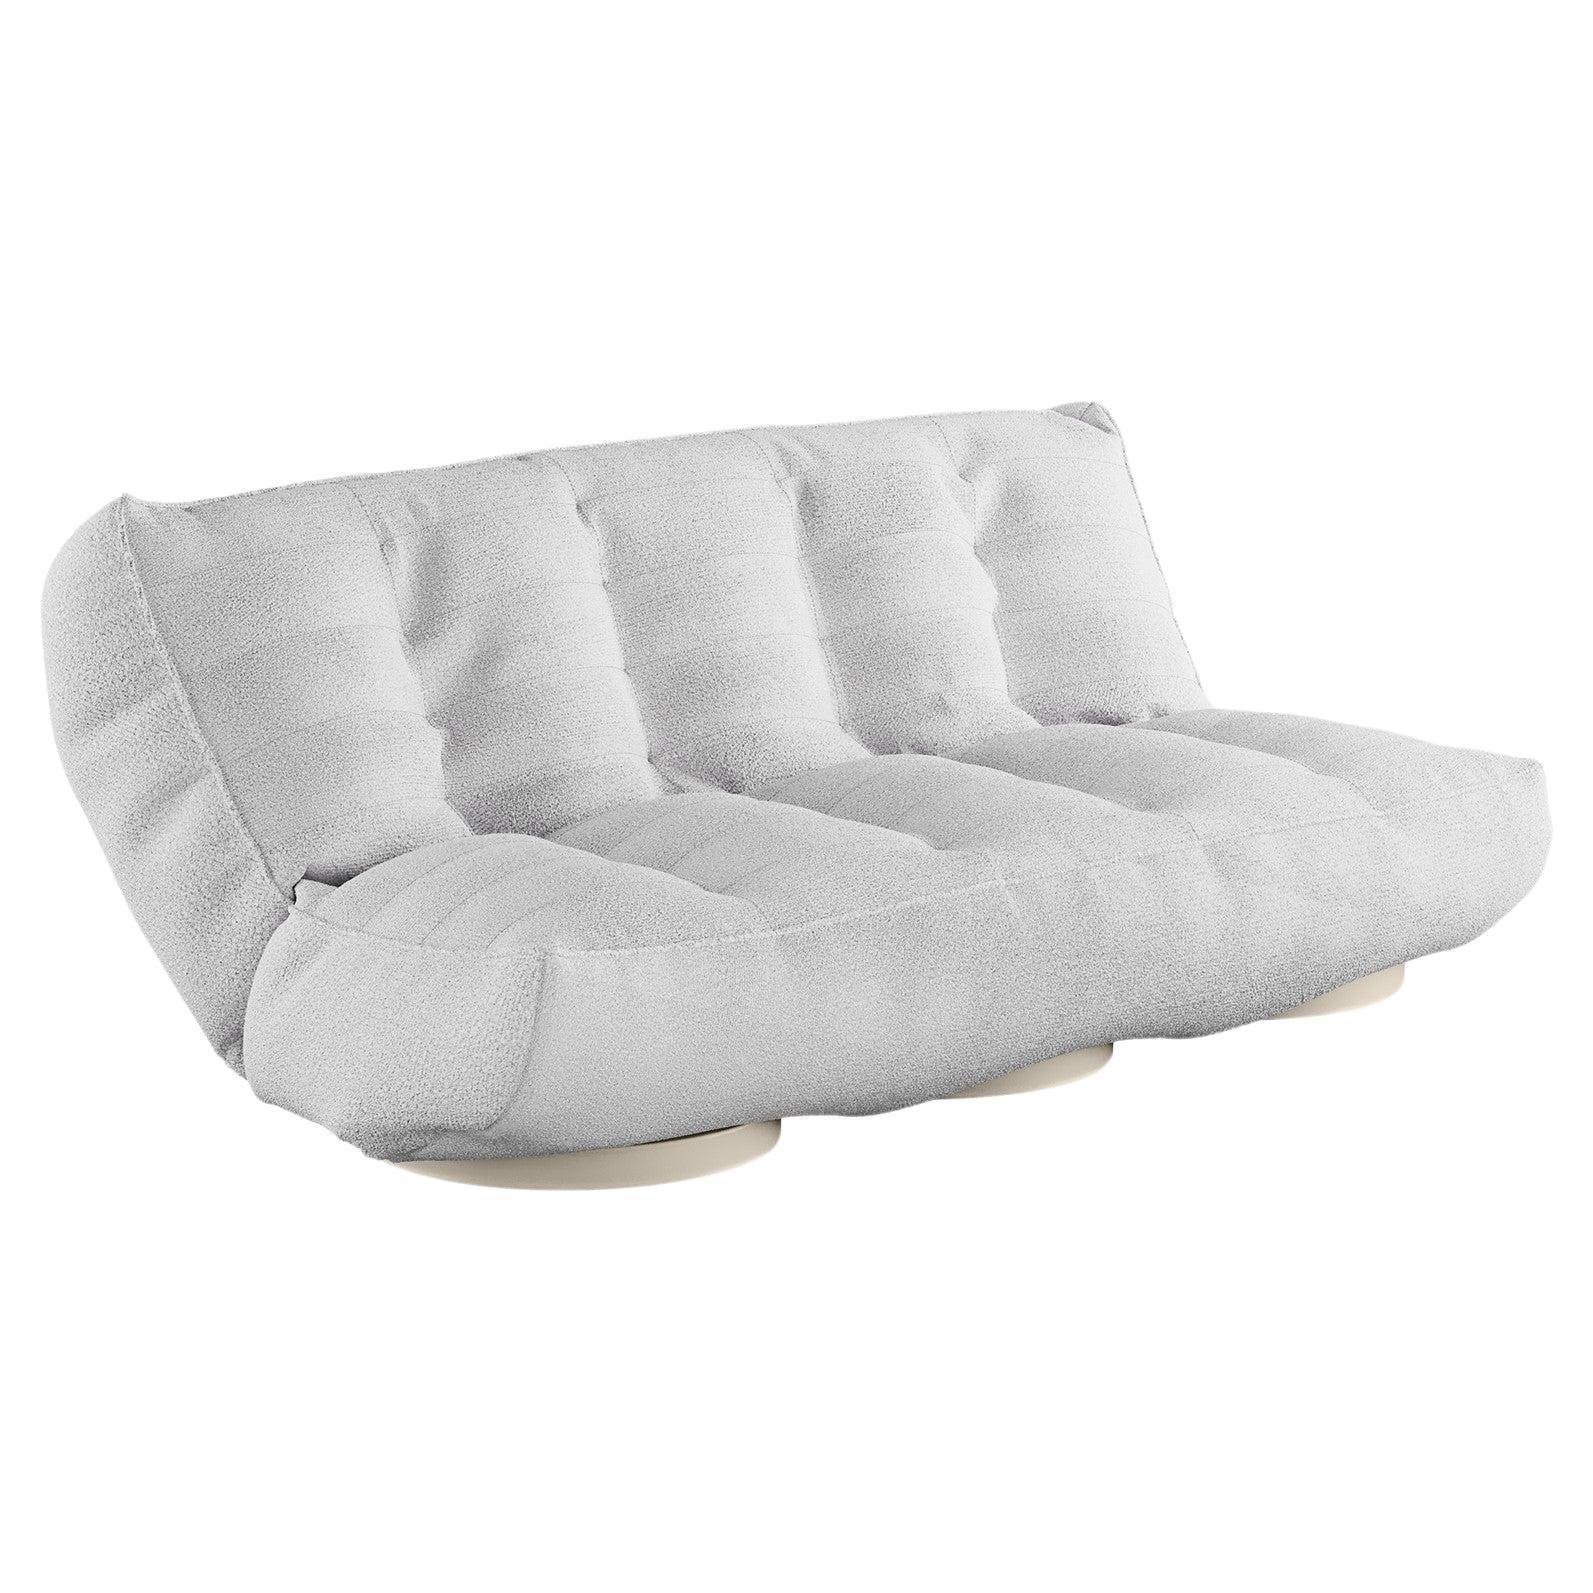 Modernes Outdoor-Sofa Klappbares weißes Daybed gepolstert in Sand Outdoor-Stoff im Angebot